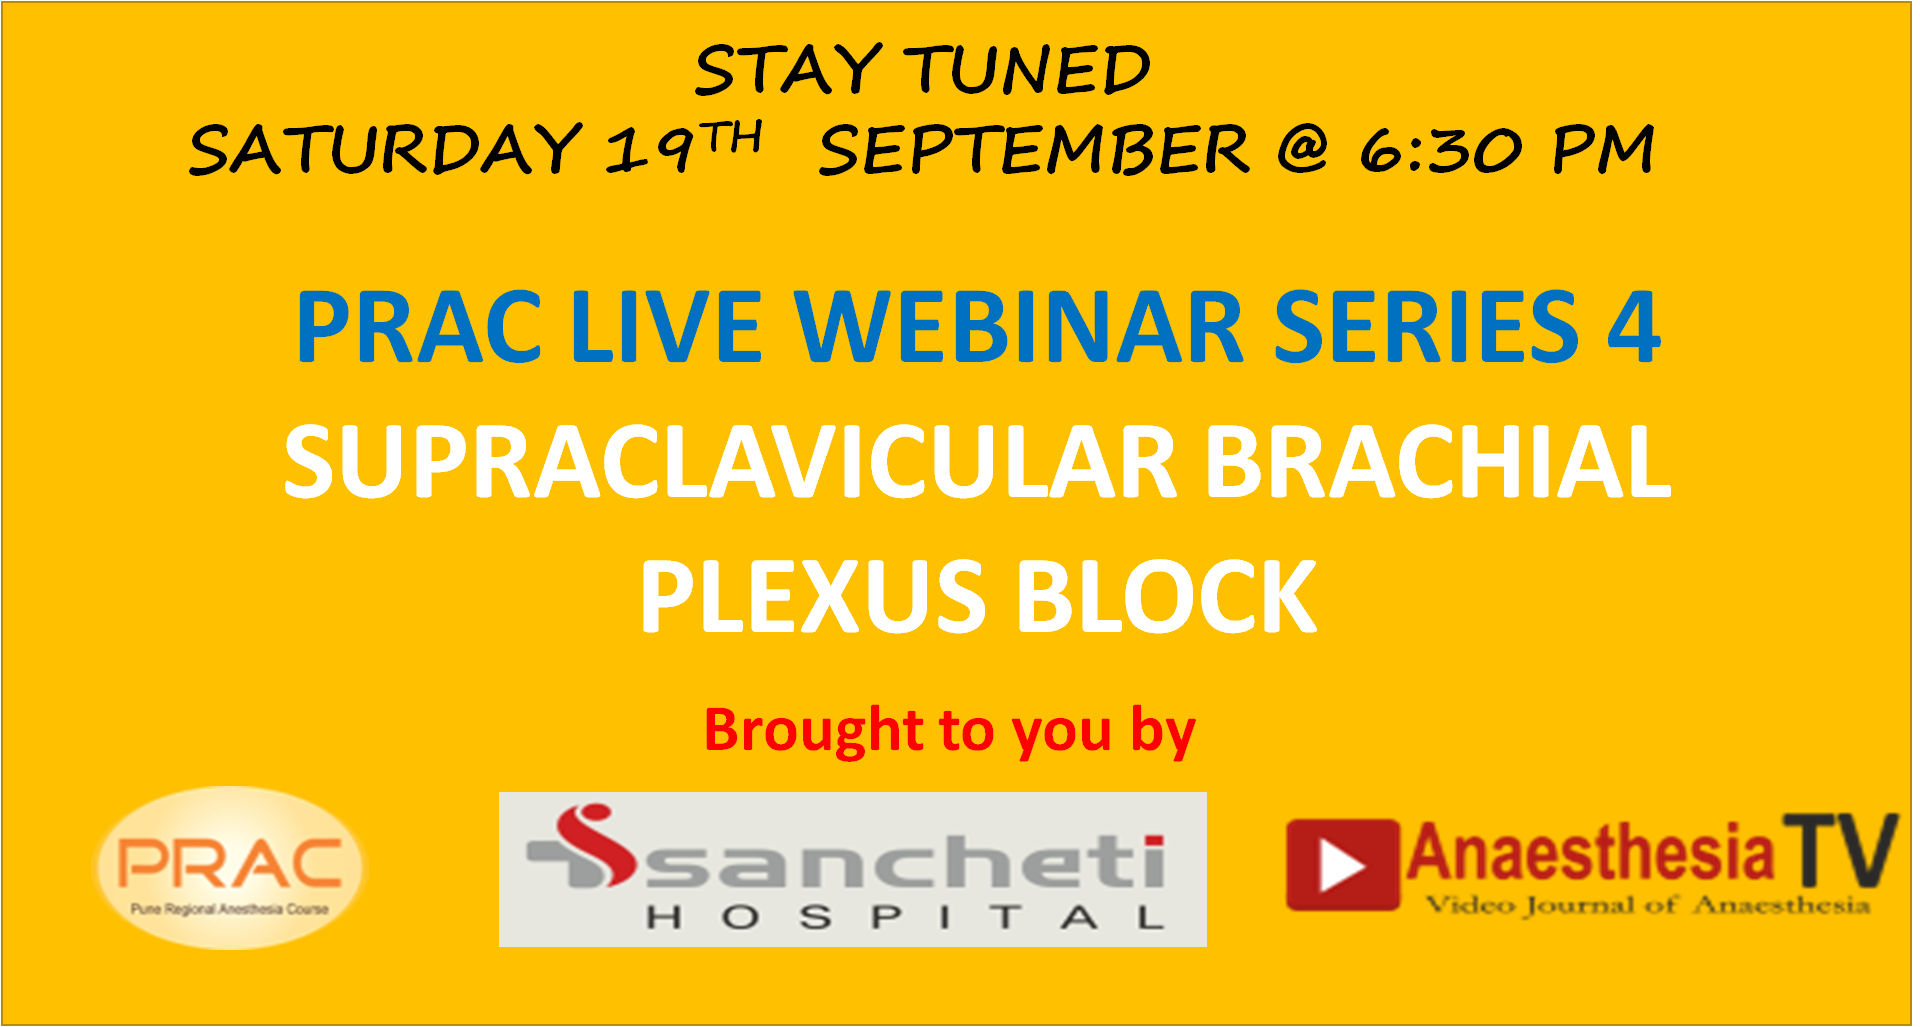 PRAC LIVE WEBINAR SERIES 4 SUPRACLAVICULAR BRACHIAL PLEXUS BLOCK